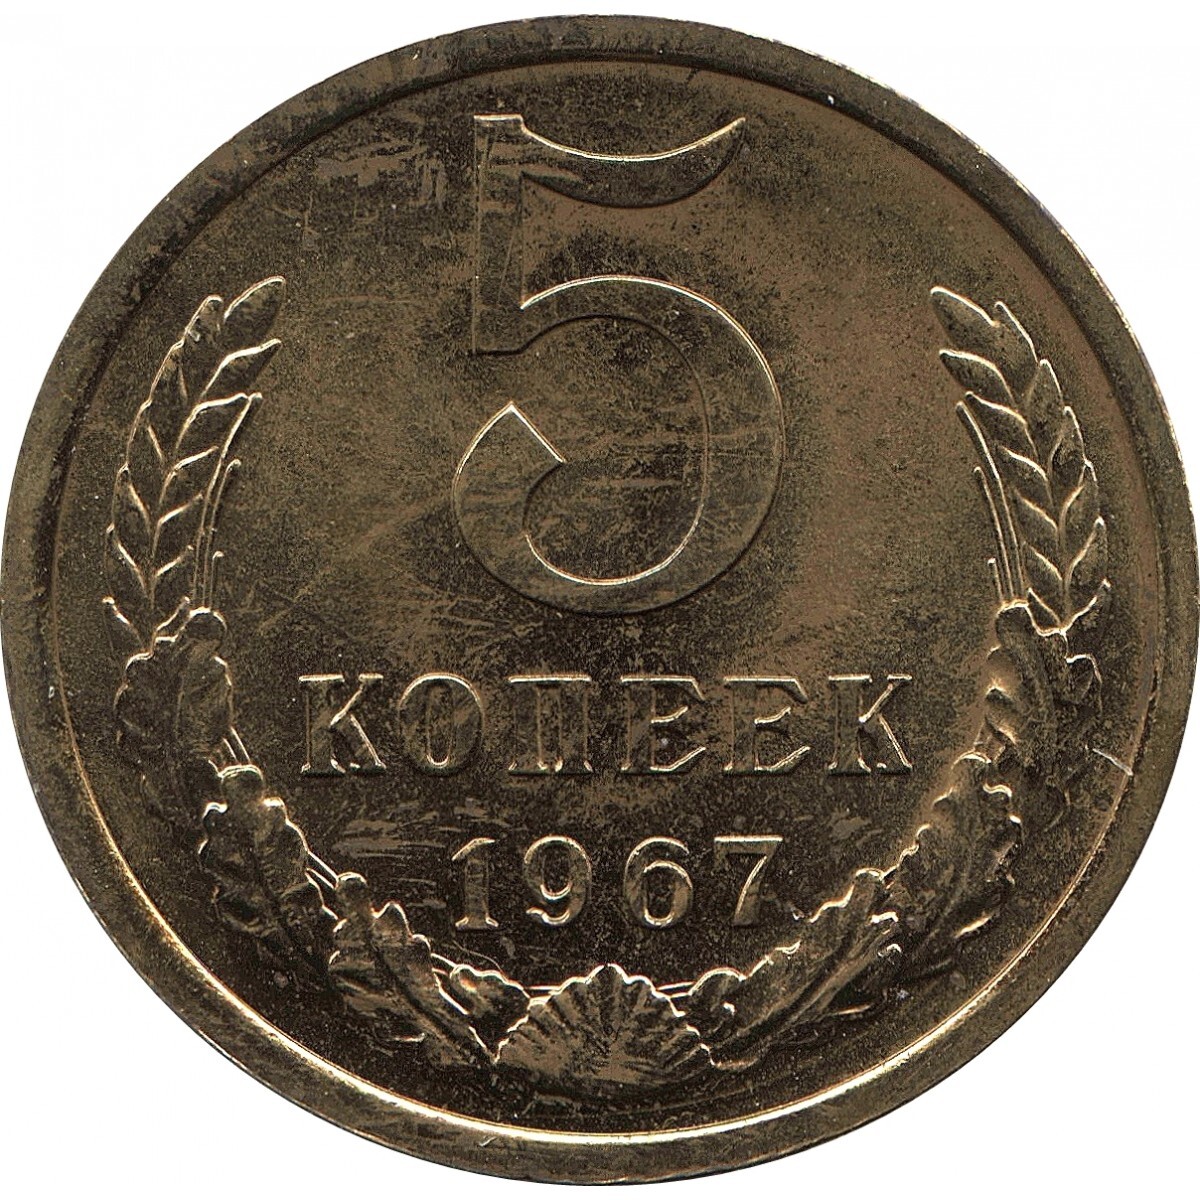 5 копеек 61. Монета 5 копеек СССР. 5 Kopeek 1991. Монета СССР 5 рублей 1990. 5 Копеек 1991 года л.